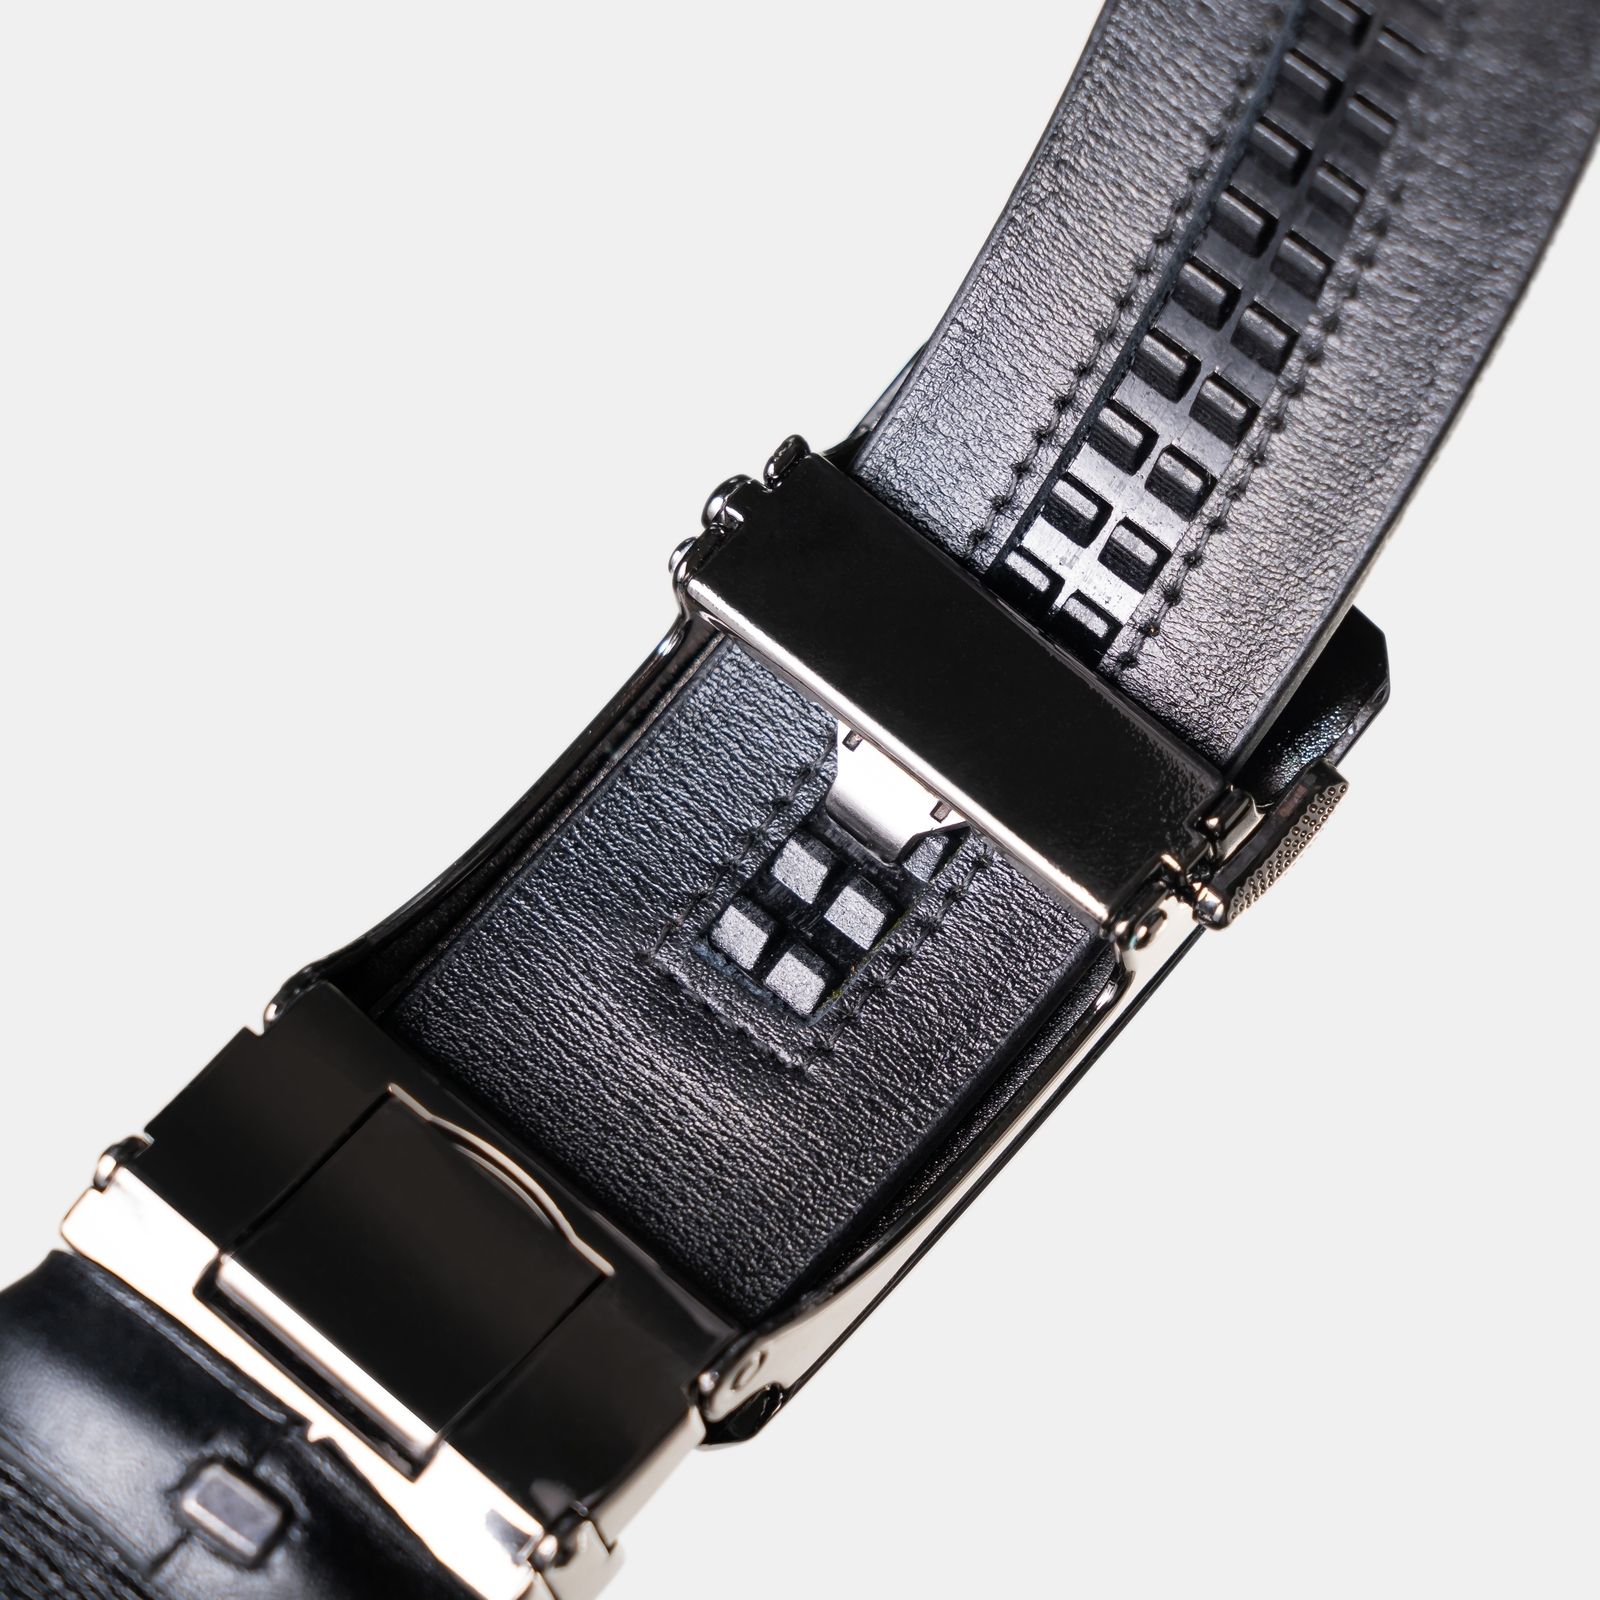  Black Casual Plain Gear Belt Image